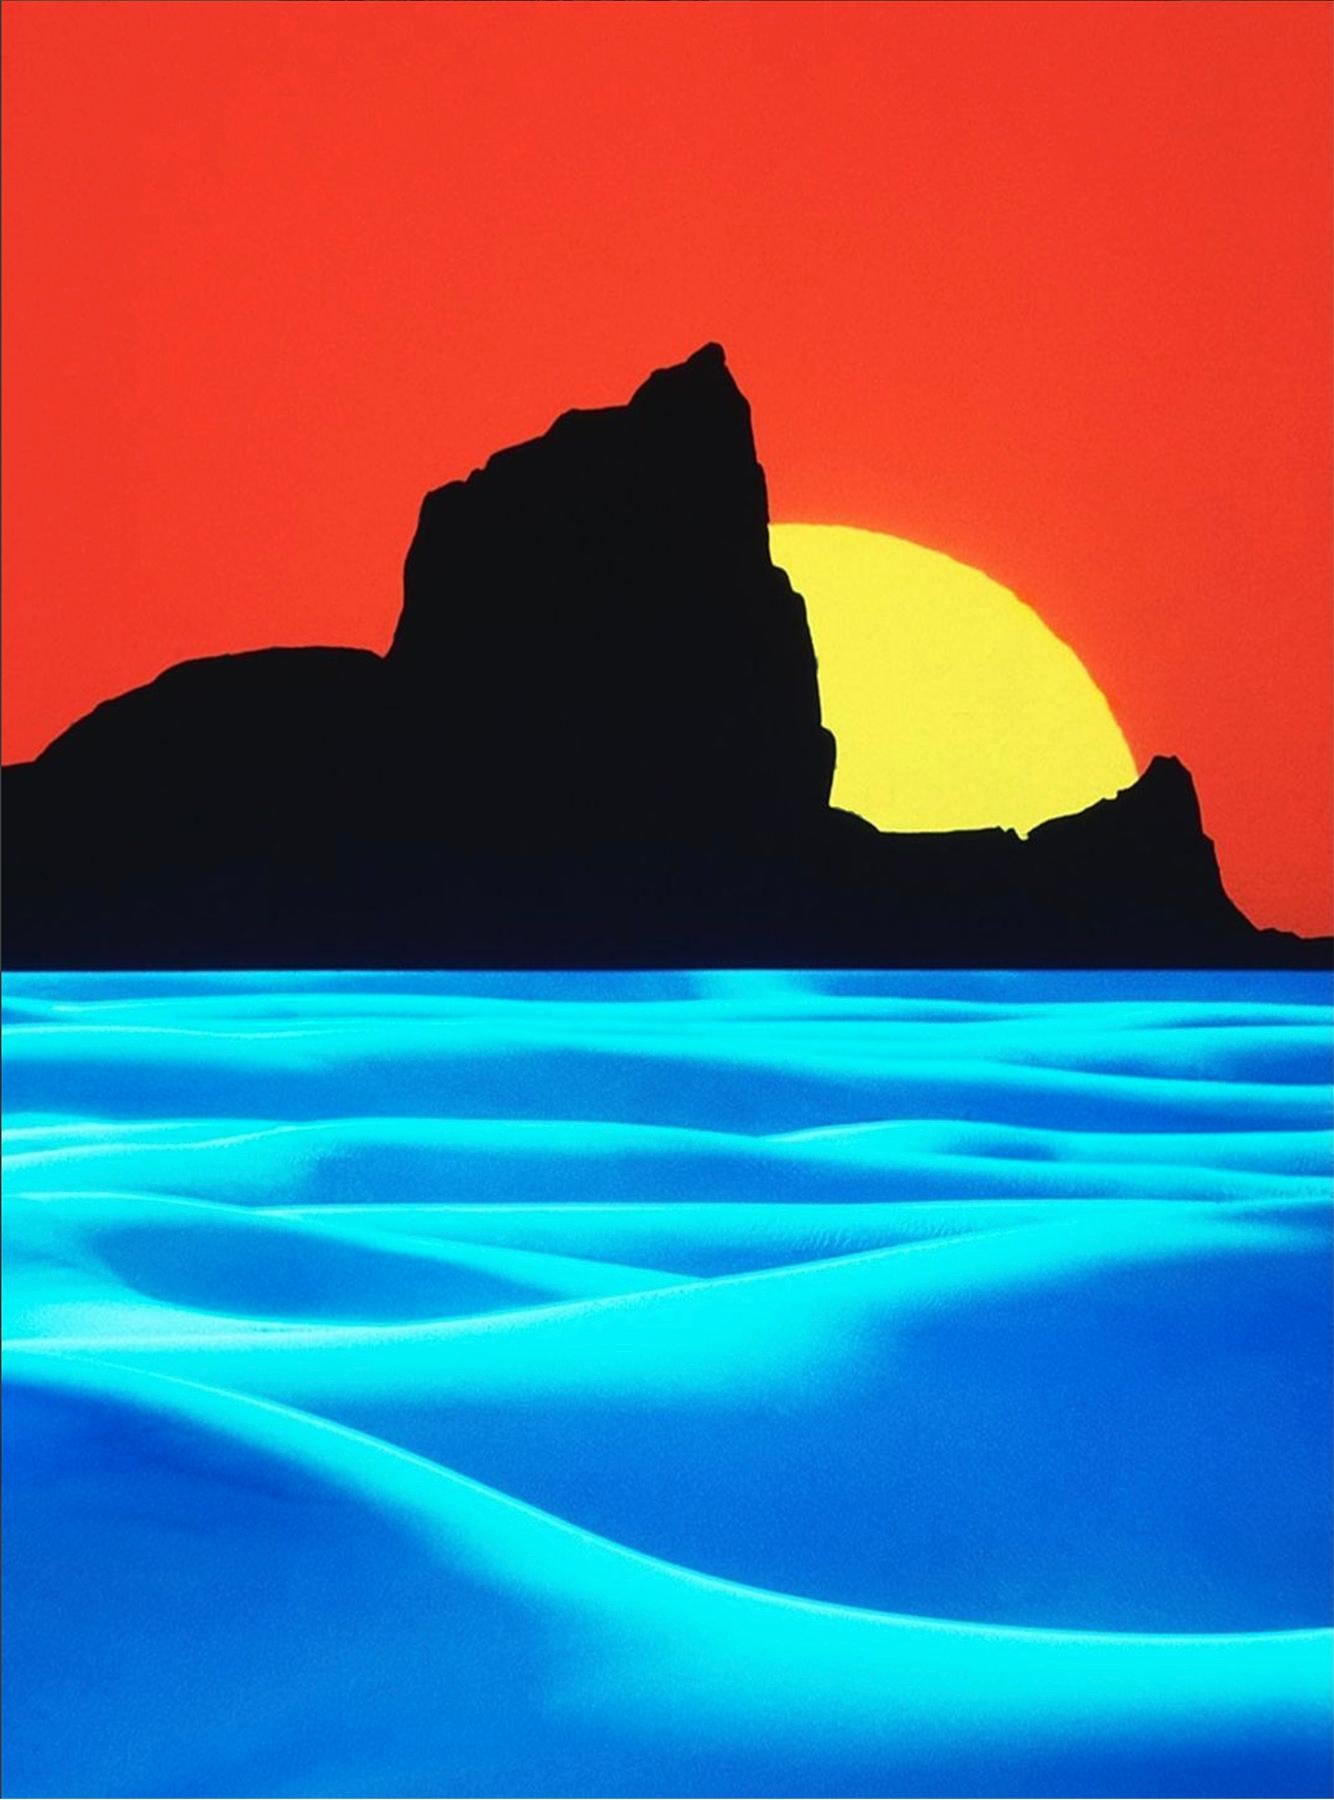 Mitchell Funk Color Photograph - Surreal Landscape Sci-Fi Landscape - Modern Photography Magazine Cover